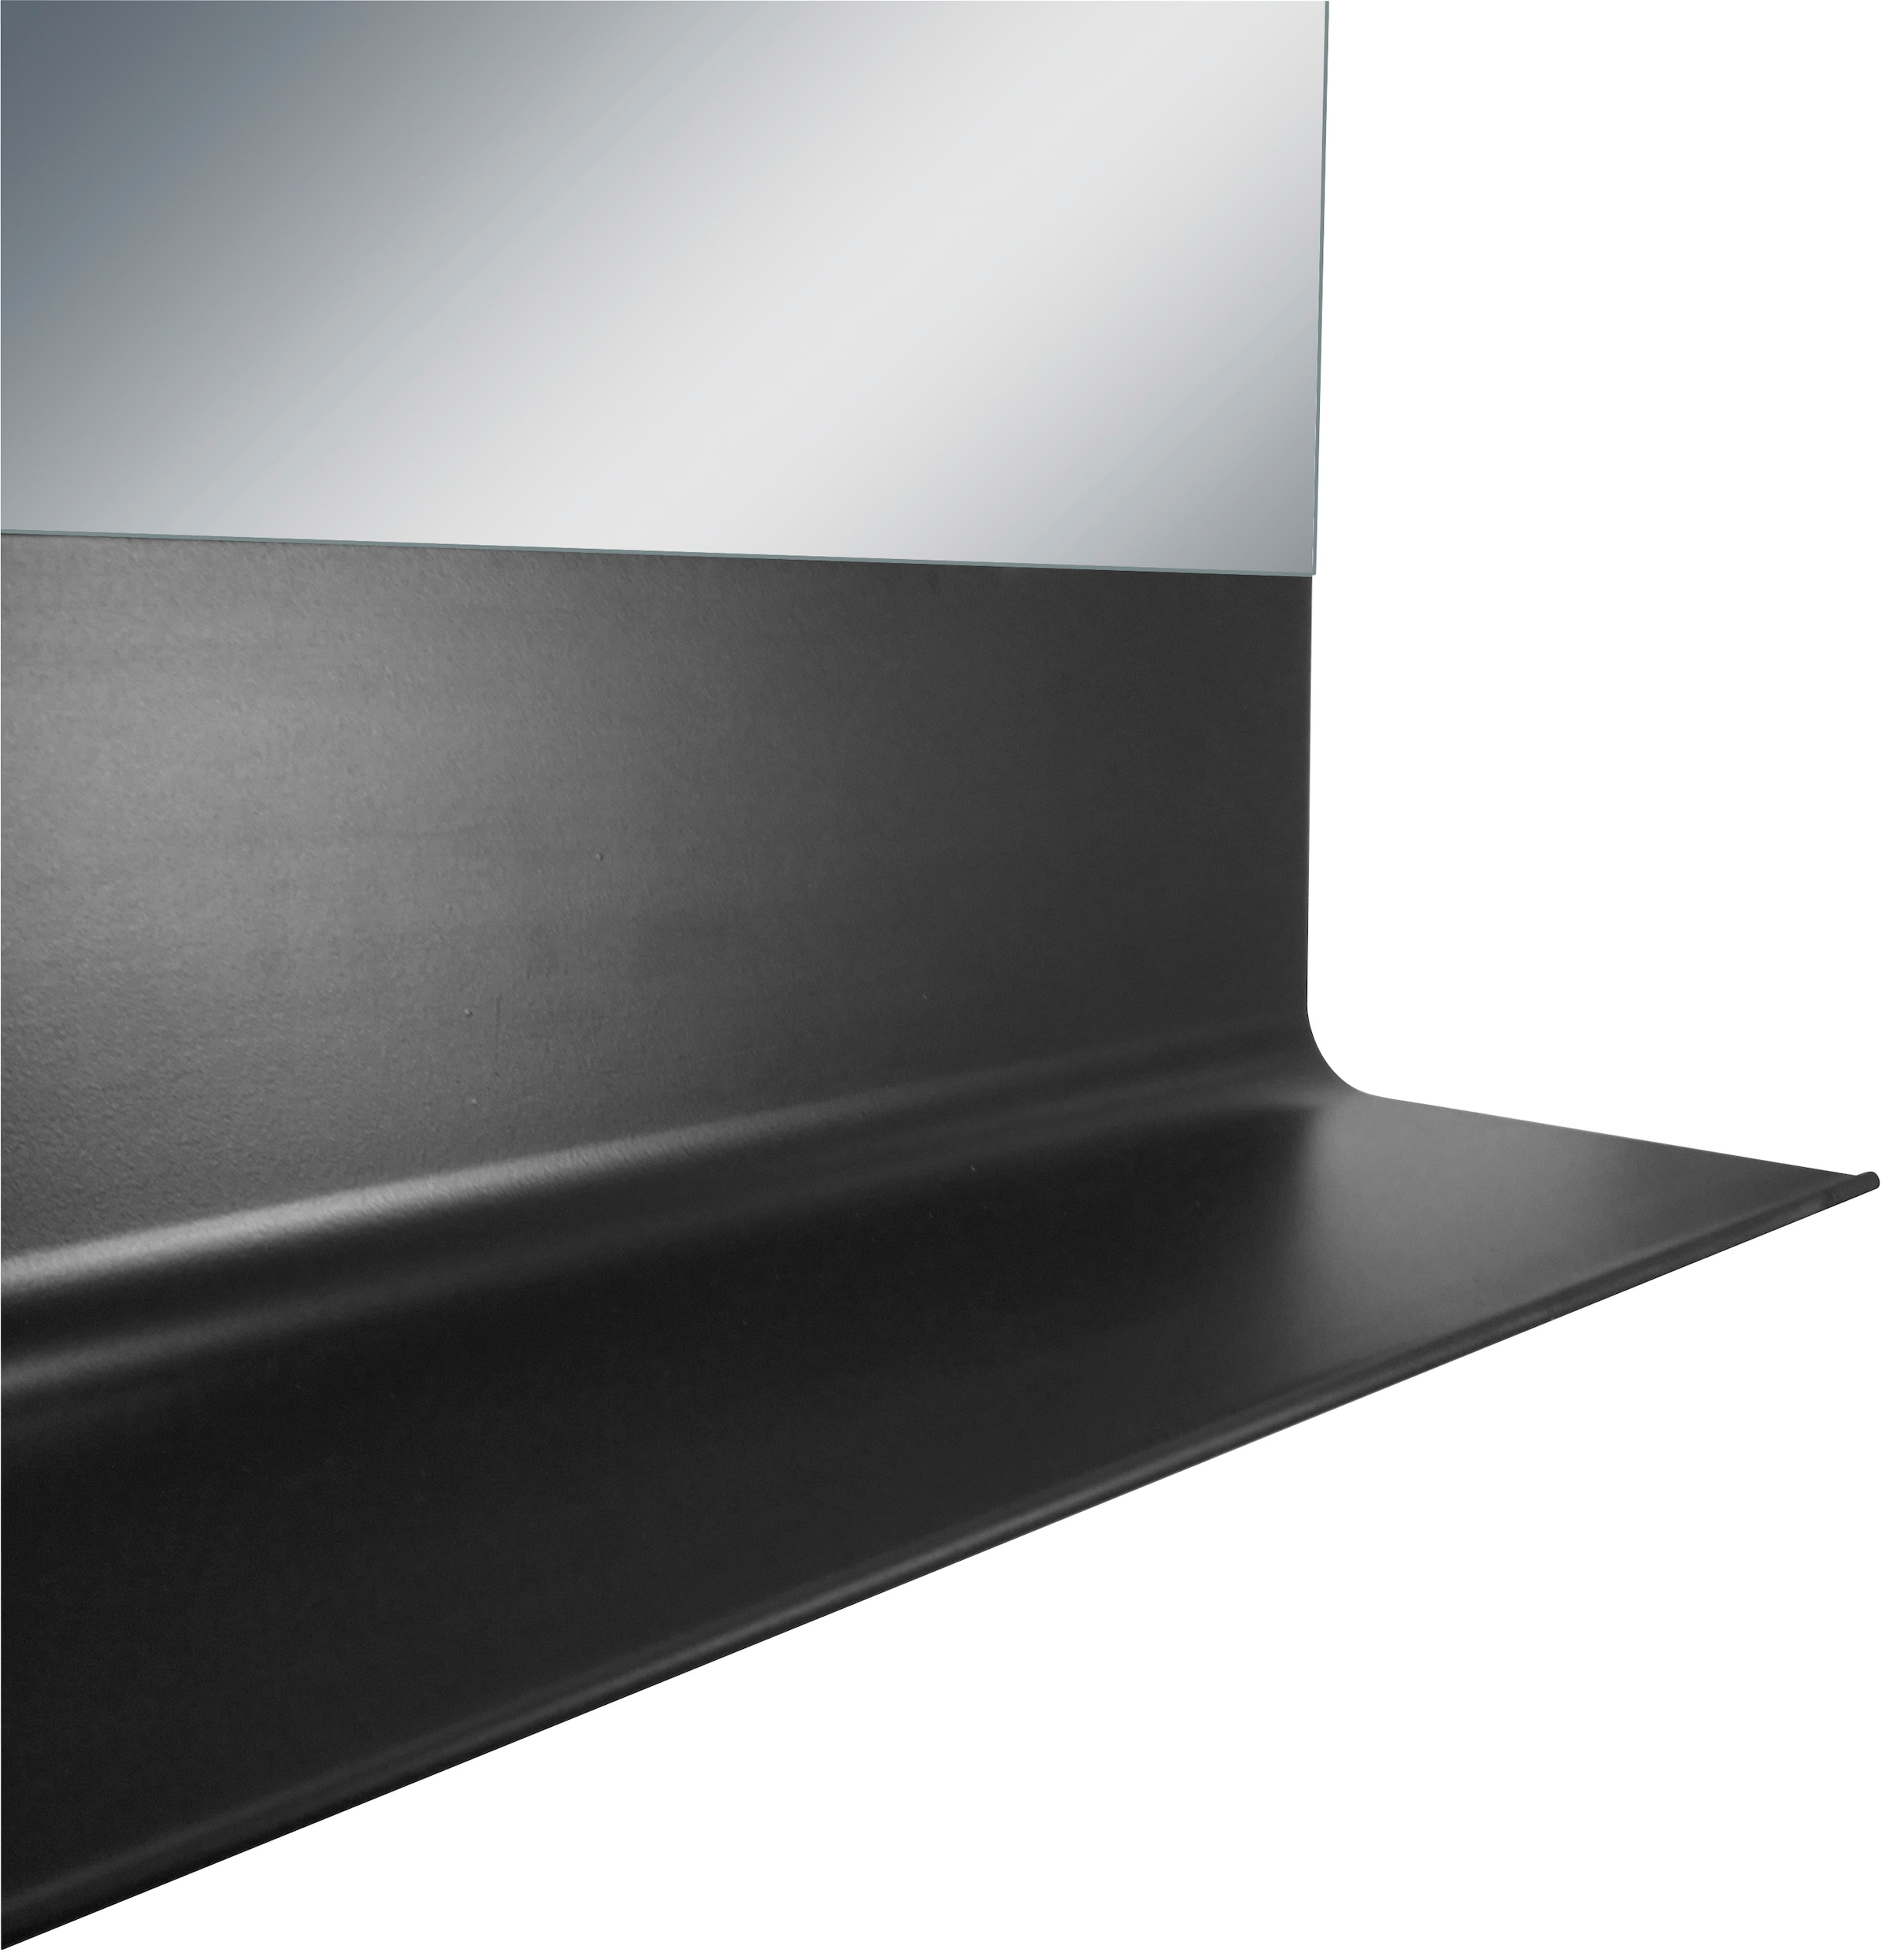 Talos Badspiegel »BLACK HOME«, (Komplett-Set), BxH: 80x60 cm, energiesparend